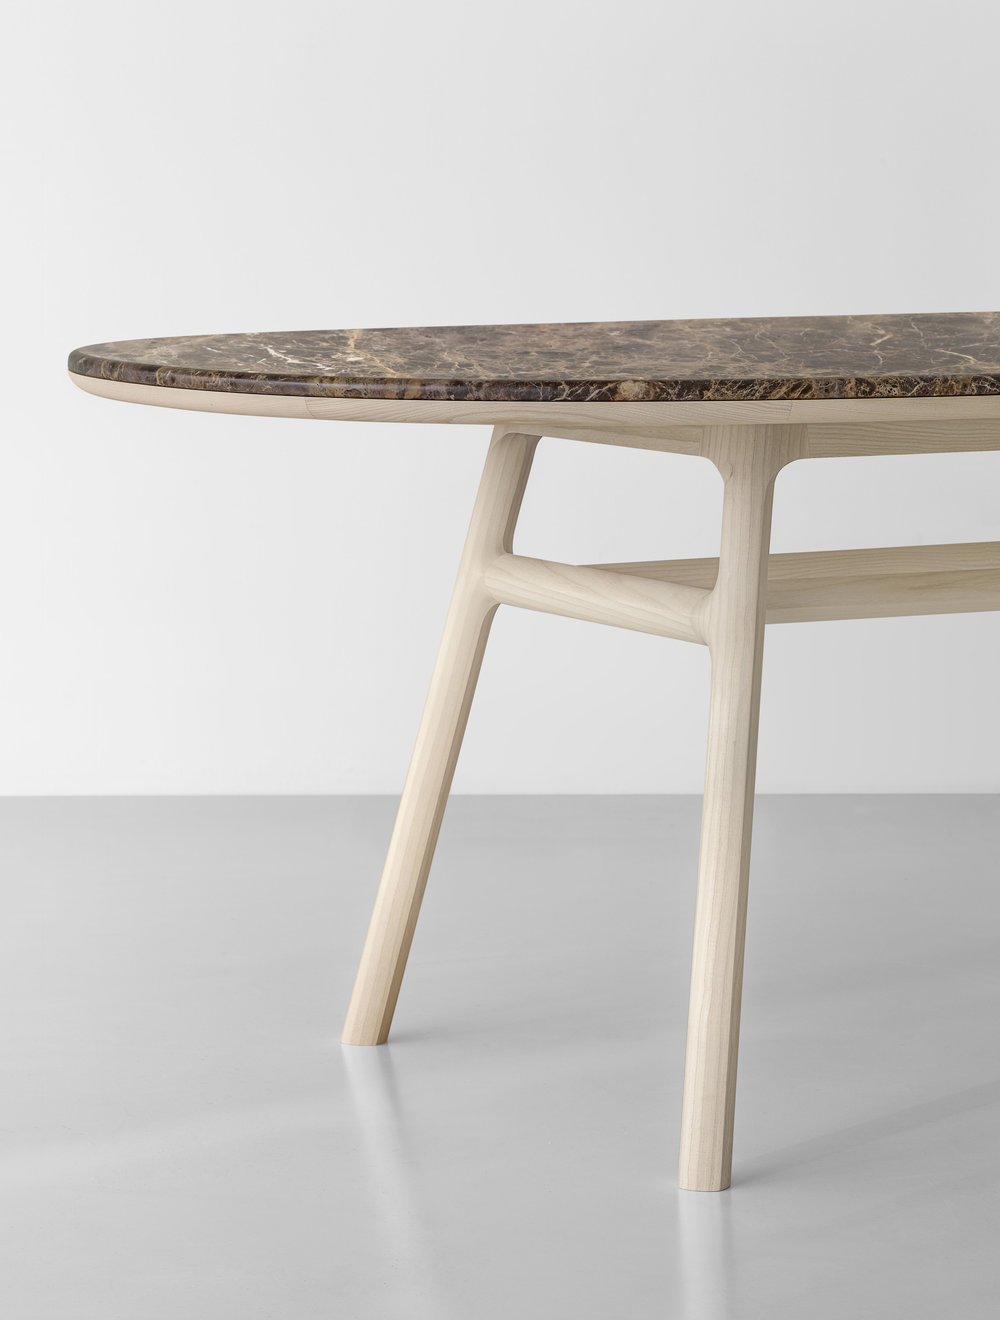 medeo-table_furniture-design_coordination-berlin_05.jpg